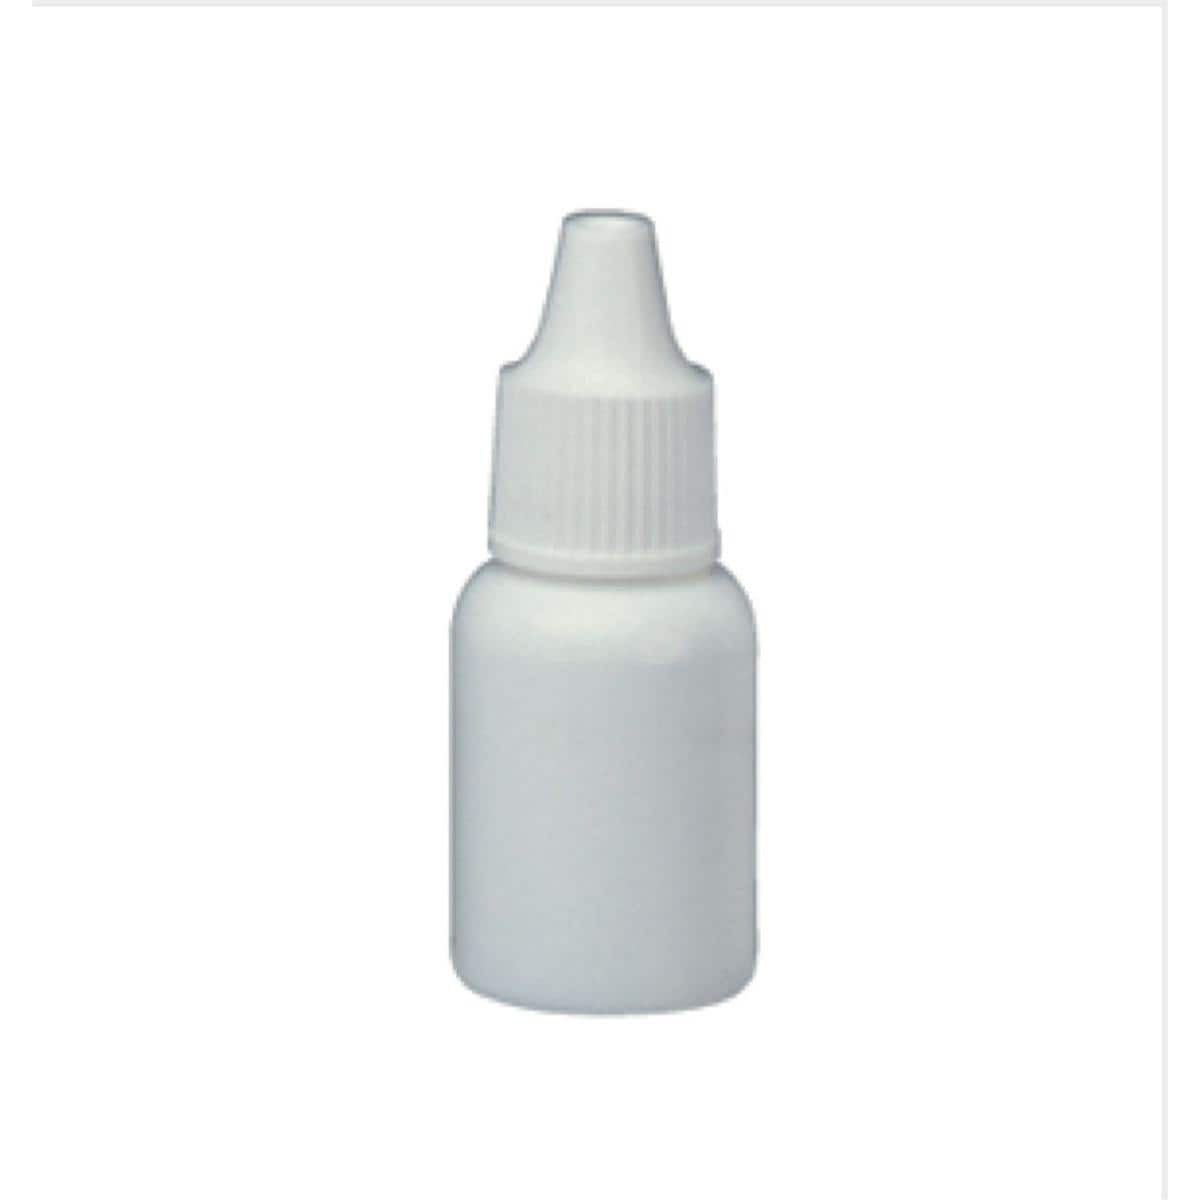 Chloramphenicol Eye Drops 0.5% Bottle 10ml